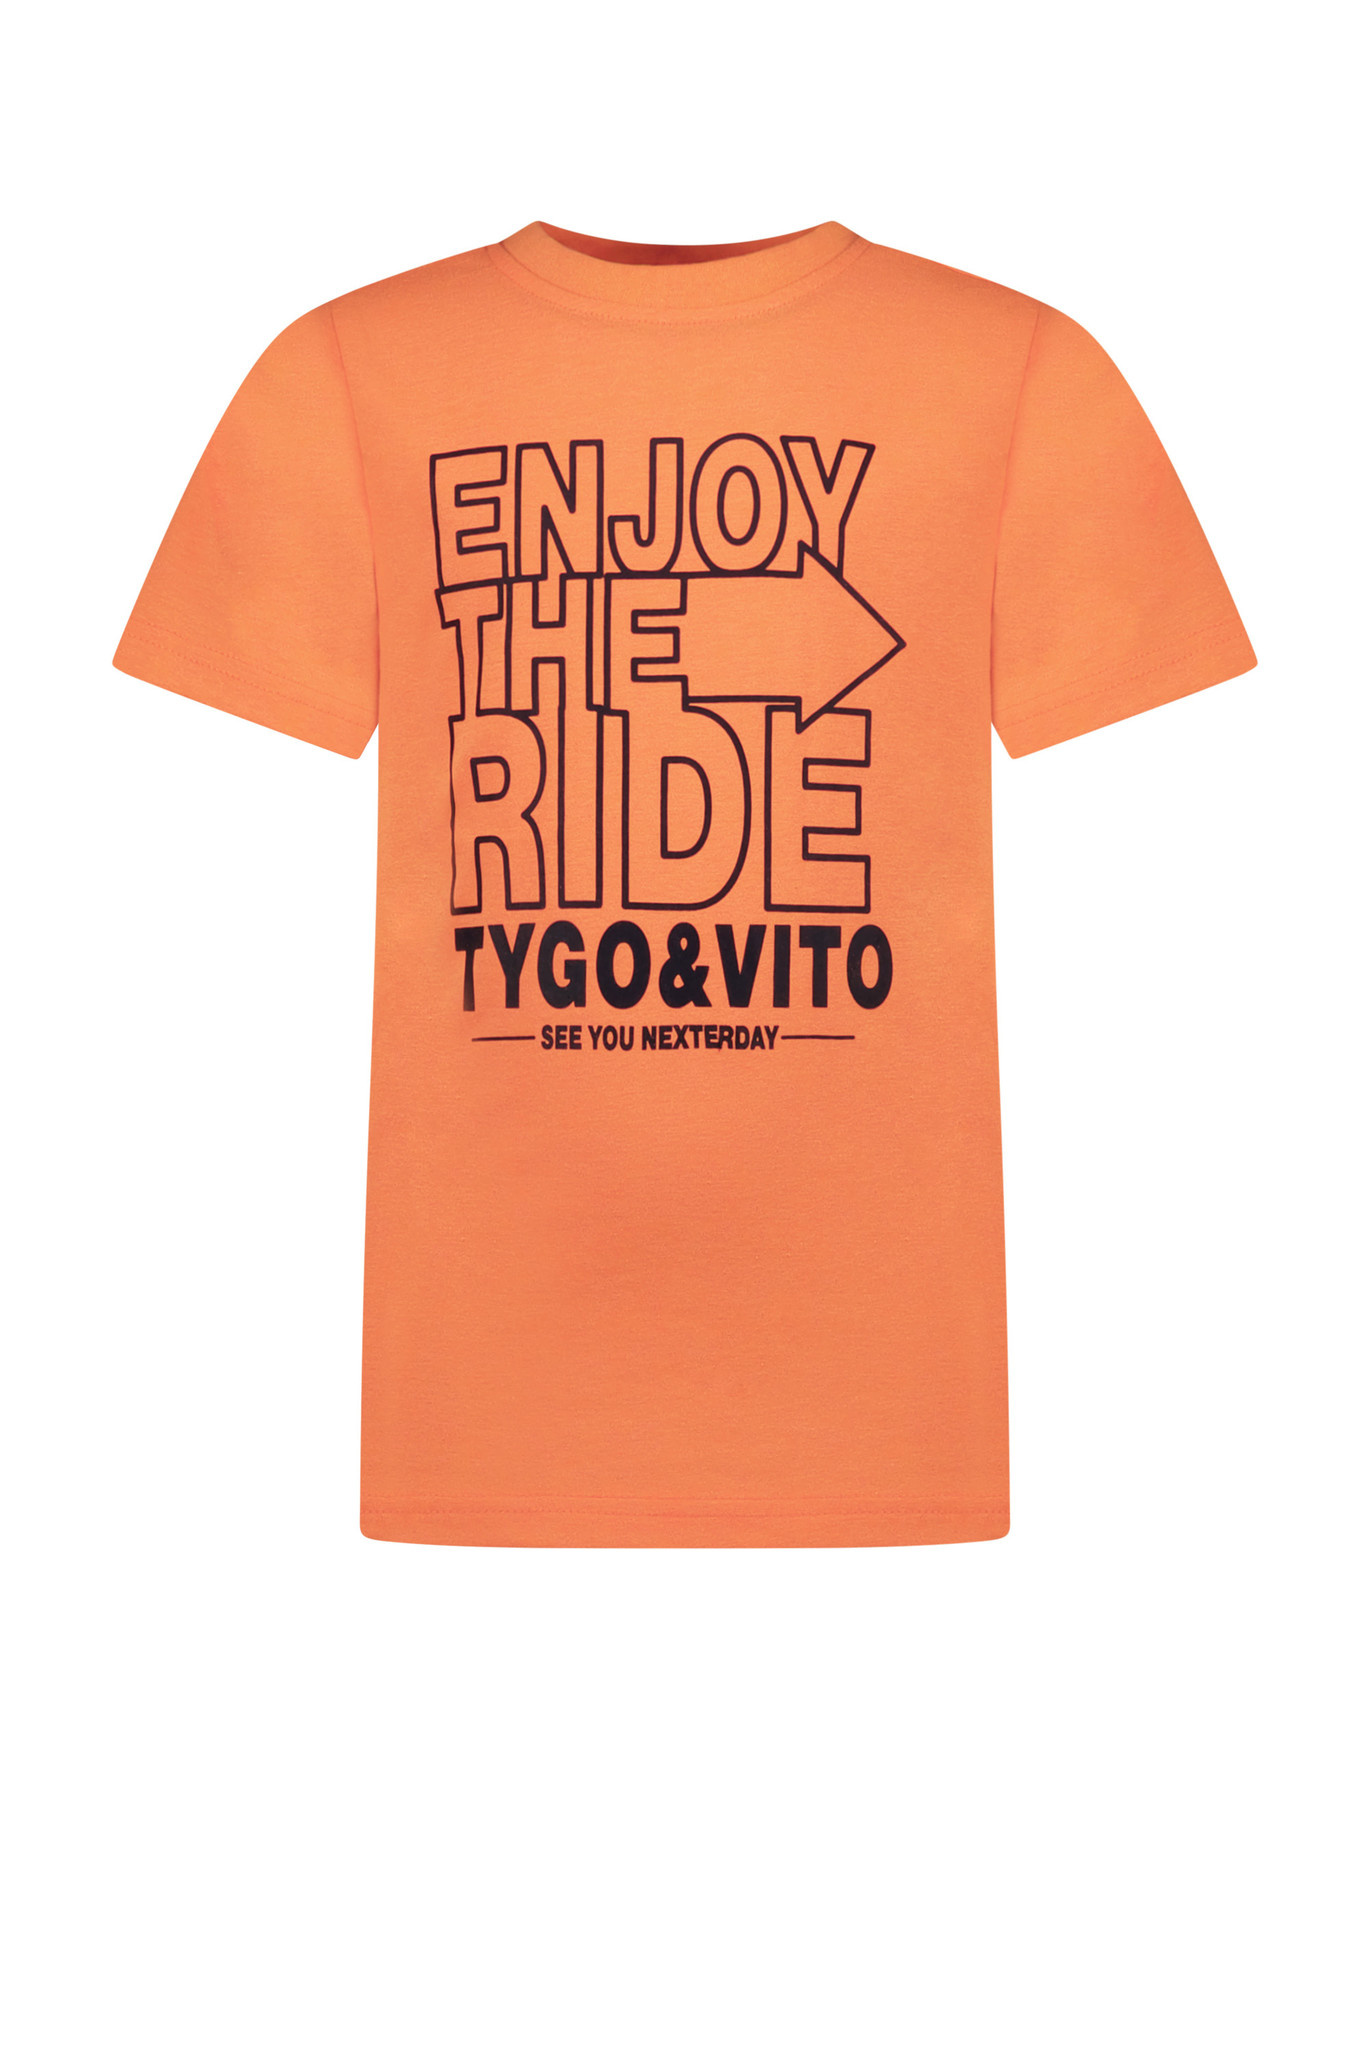 Arthur Reflectie klep Tygo & Vito - Jongens t-shirt neon - Oranje clownfish -  merkmeisjeskleding.nl